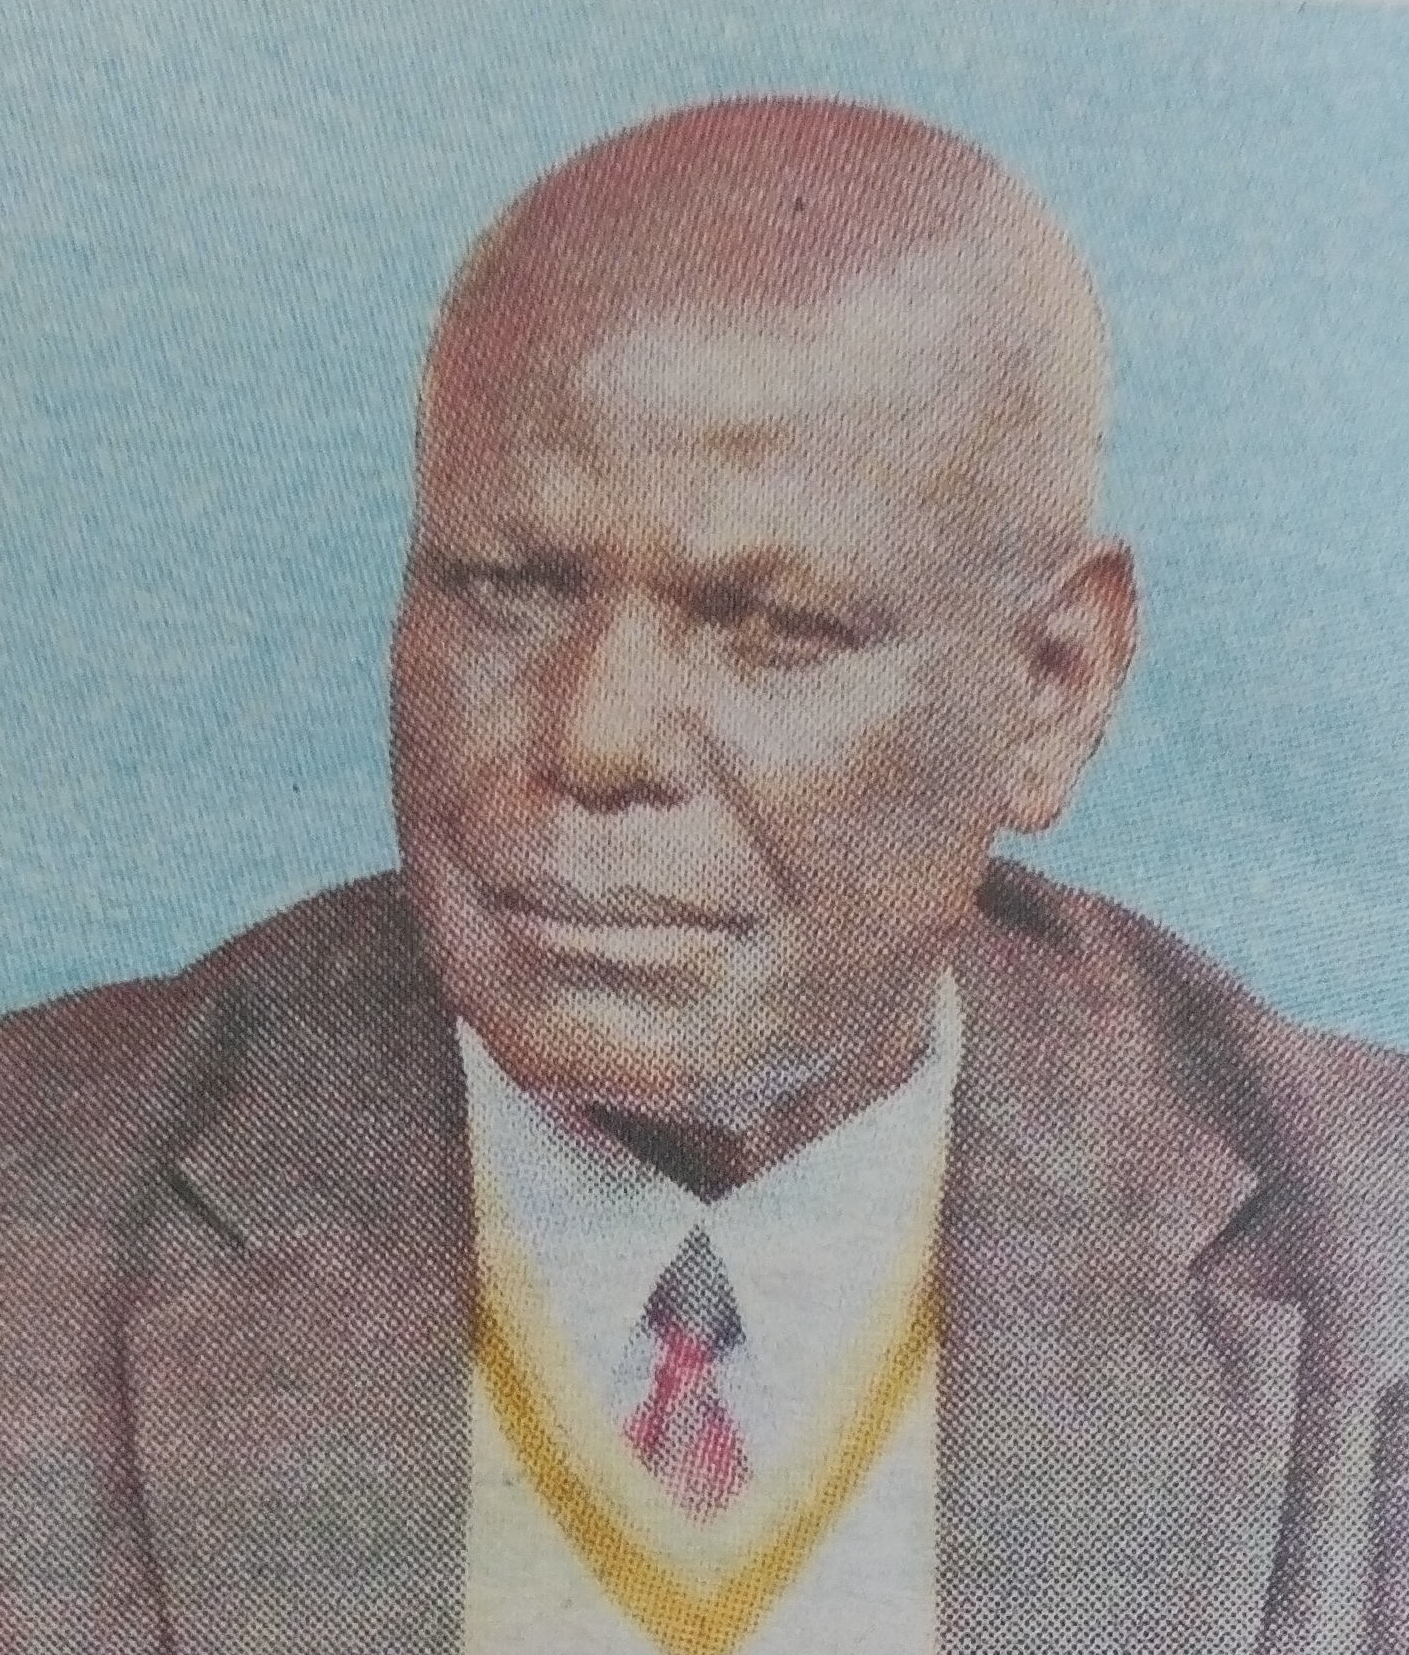 Obituary Image of Jones Kakyema Mbinda